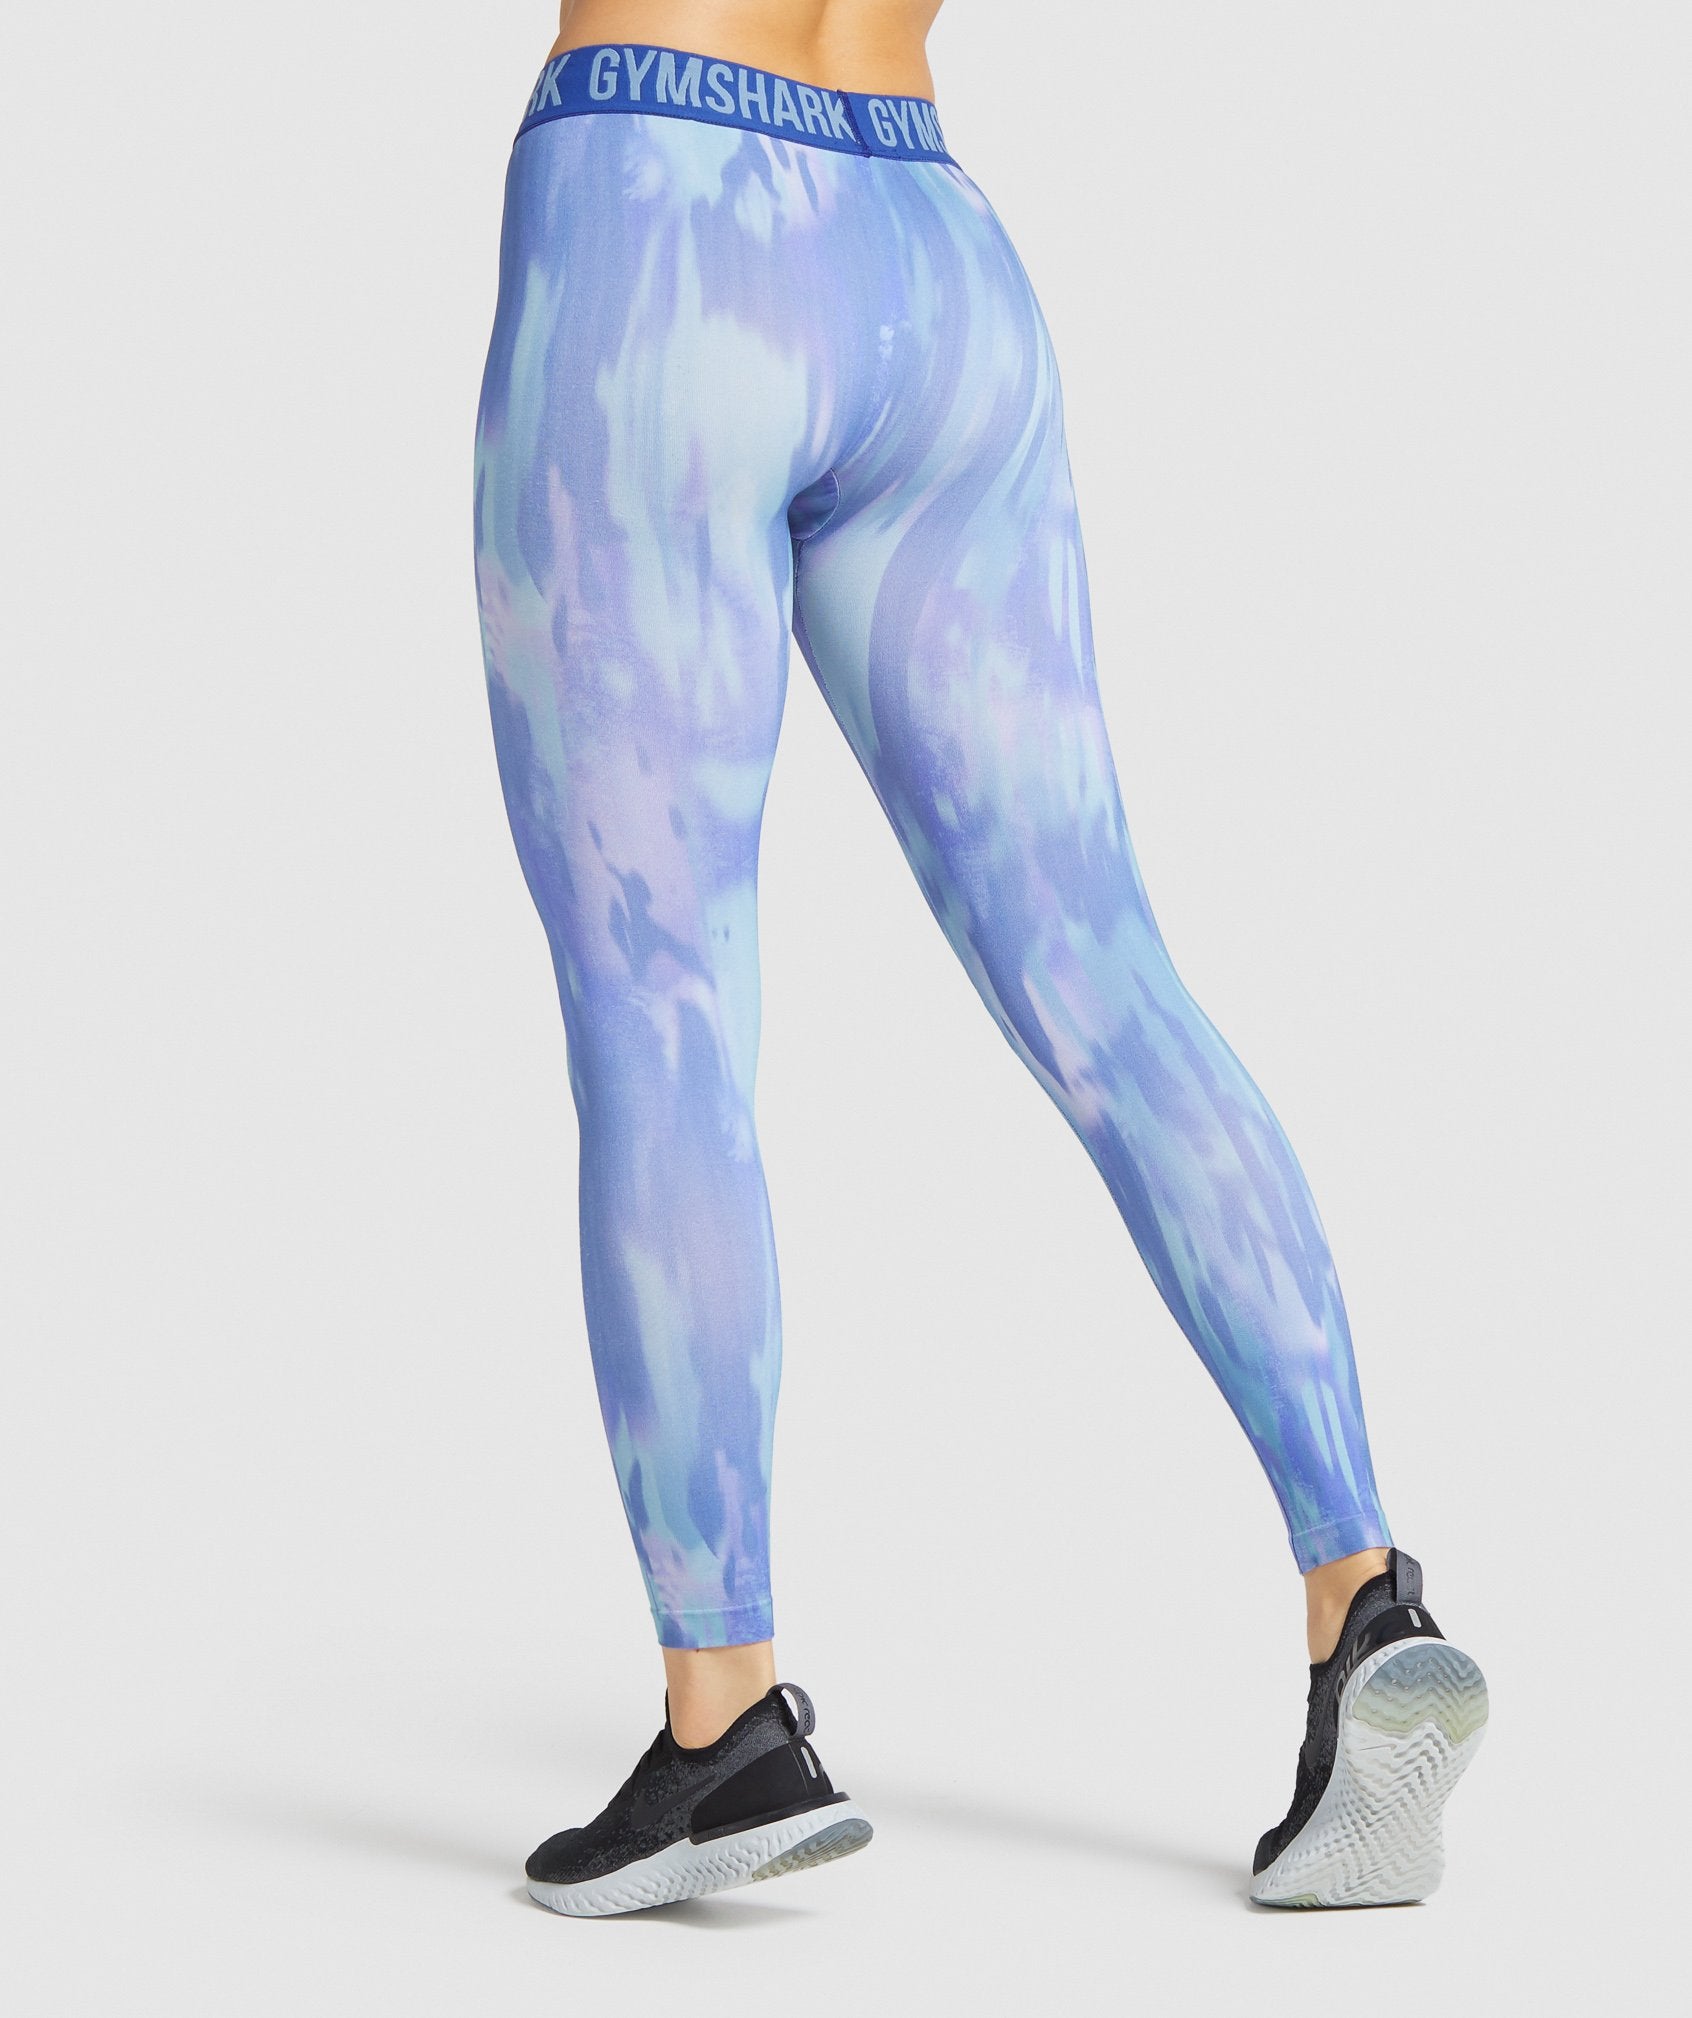 CUSTOM Dyed Ombre Athletic Leggings Yoga Pants Xx Long 